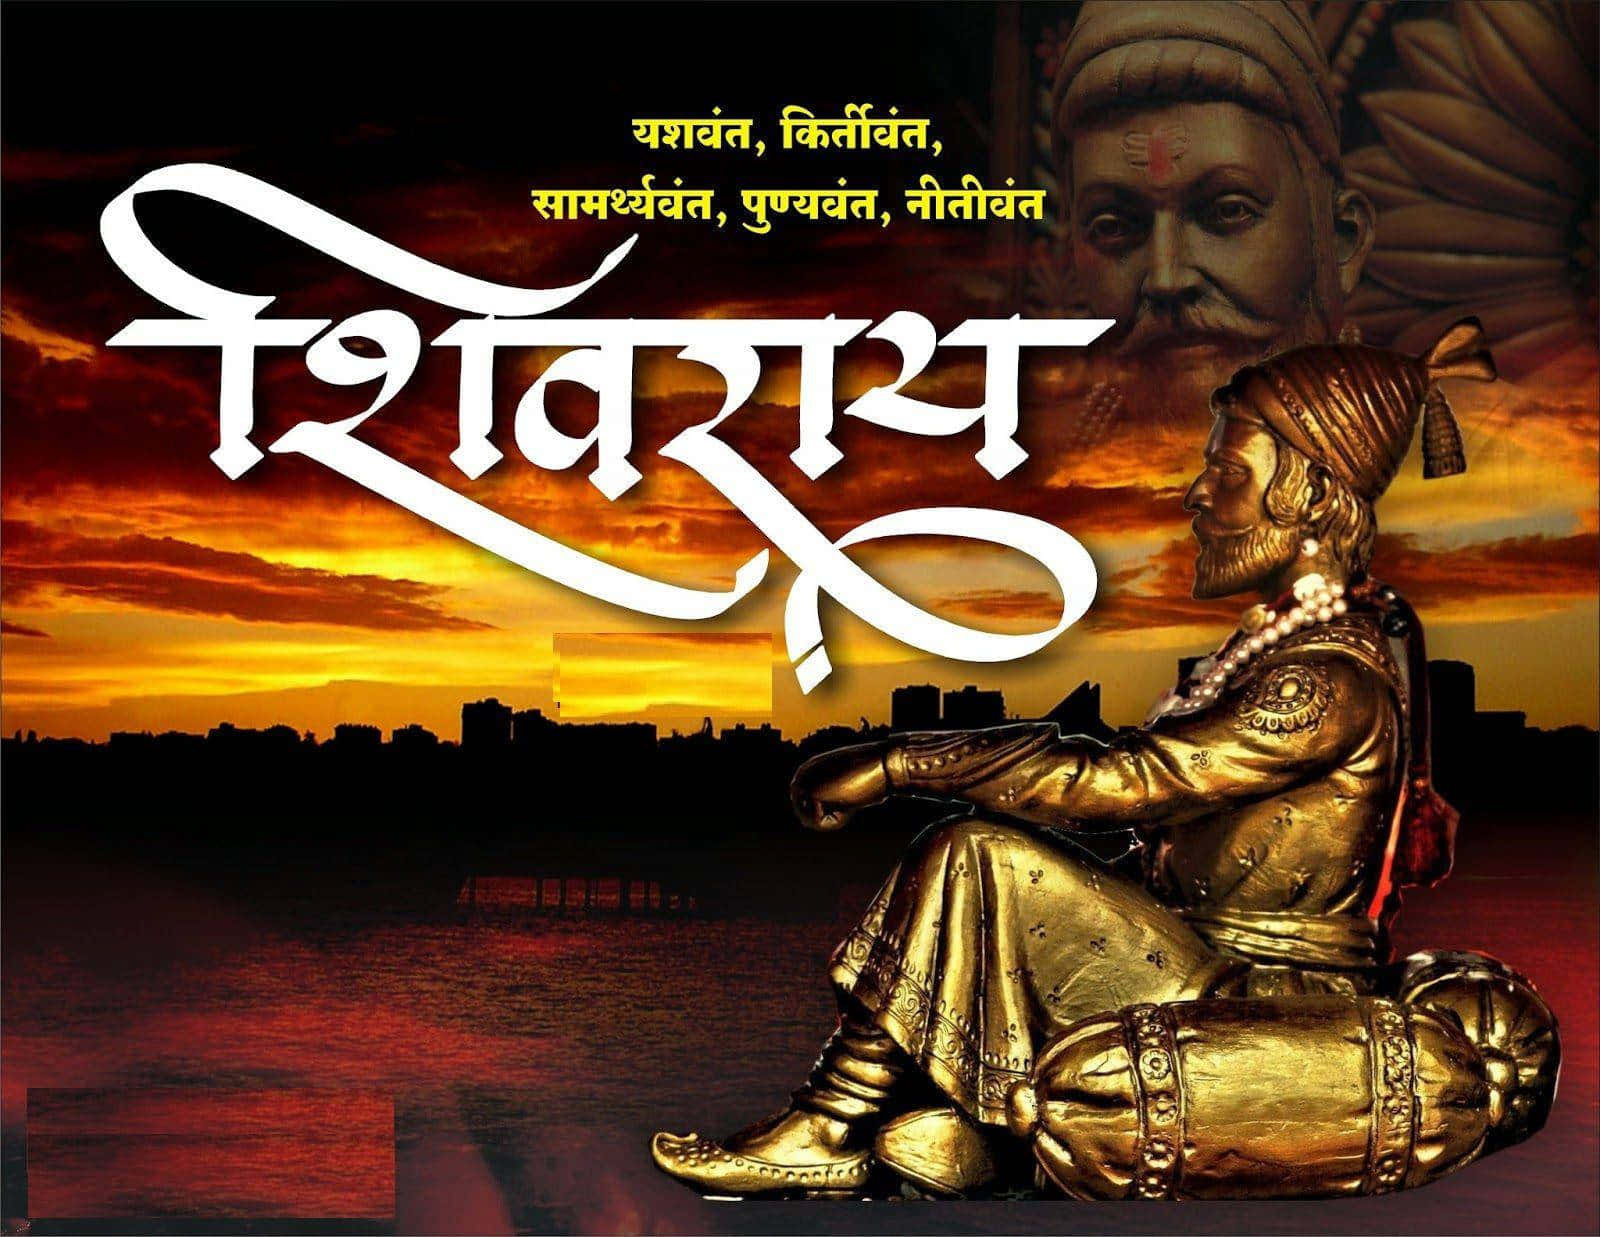 Celebrate the legacy of the warrior king Shivaji Maharaj